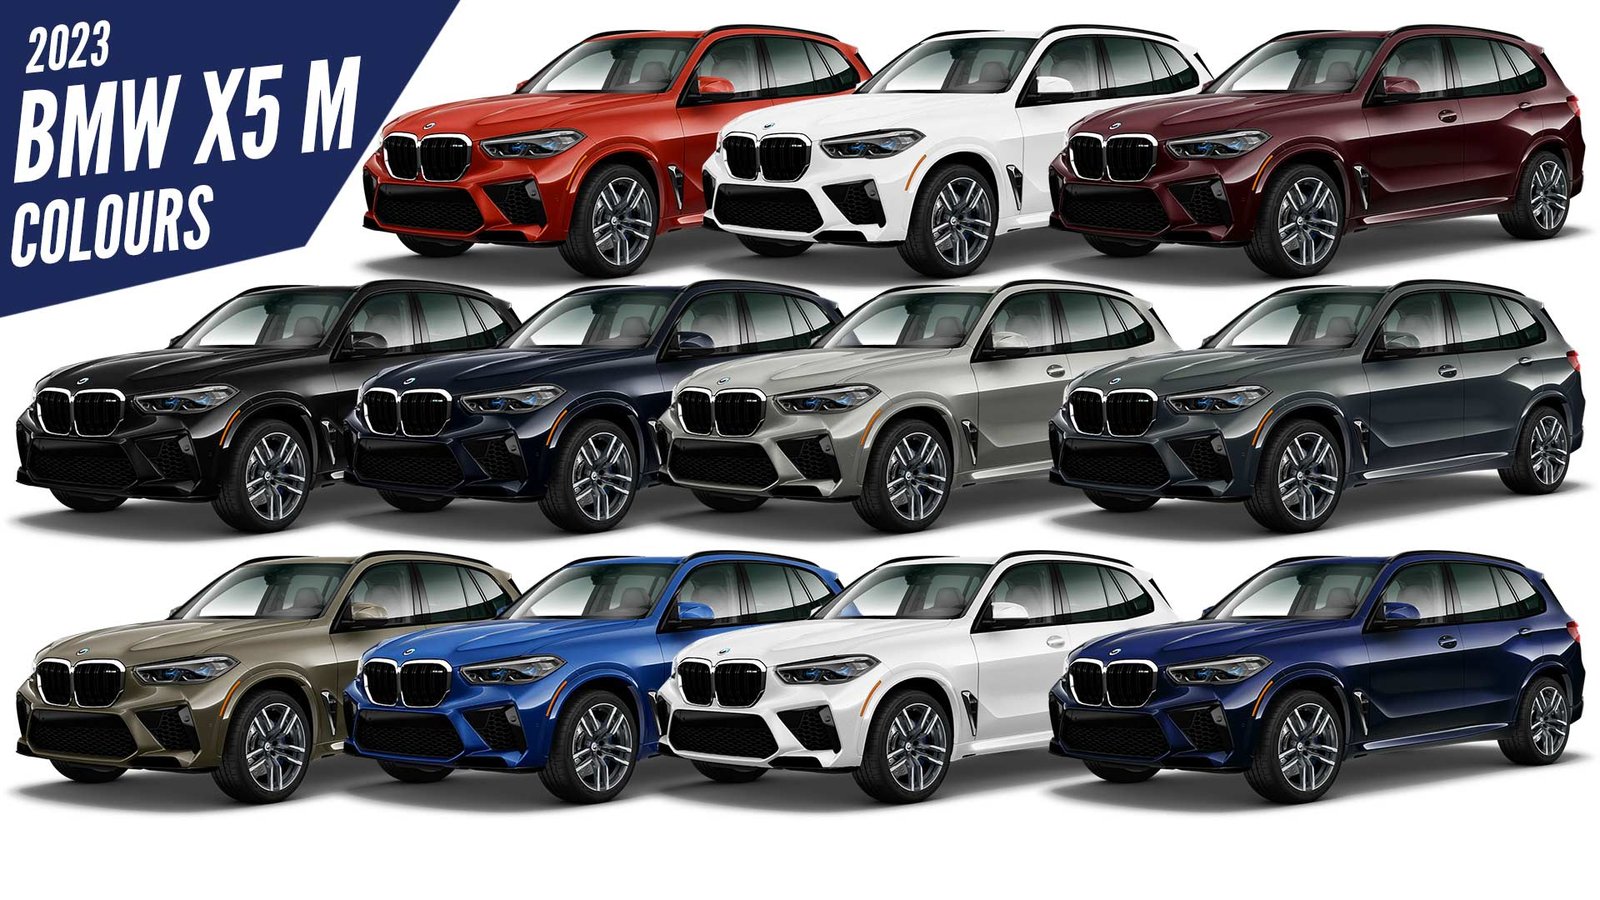 2023 BMW X5 M SUV All Color Options Images AUTOBICS